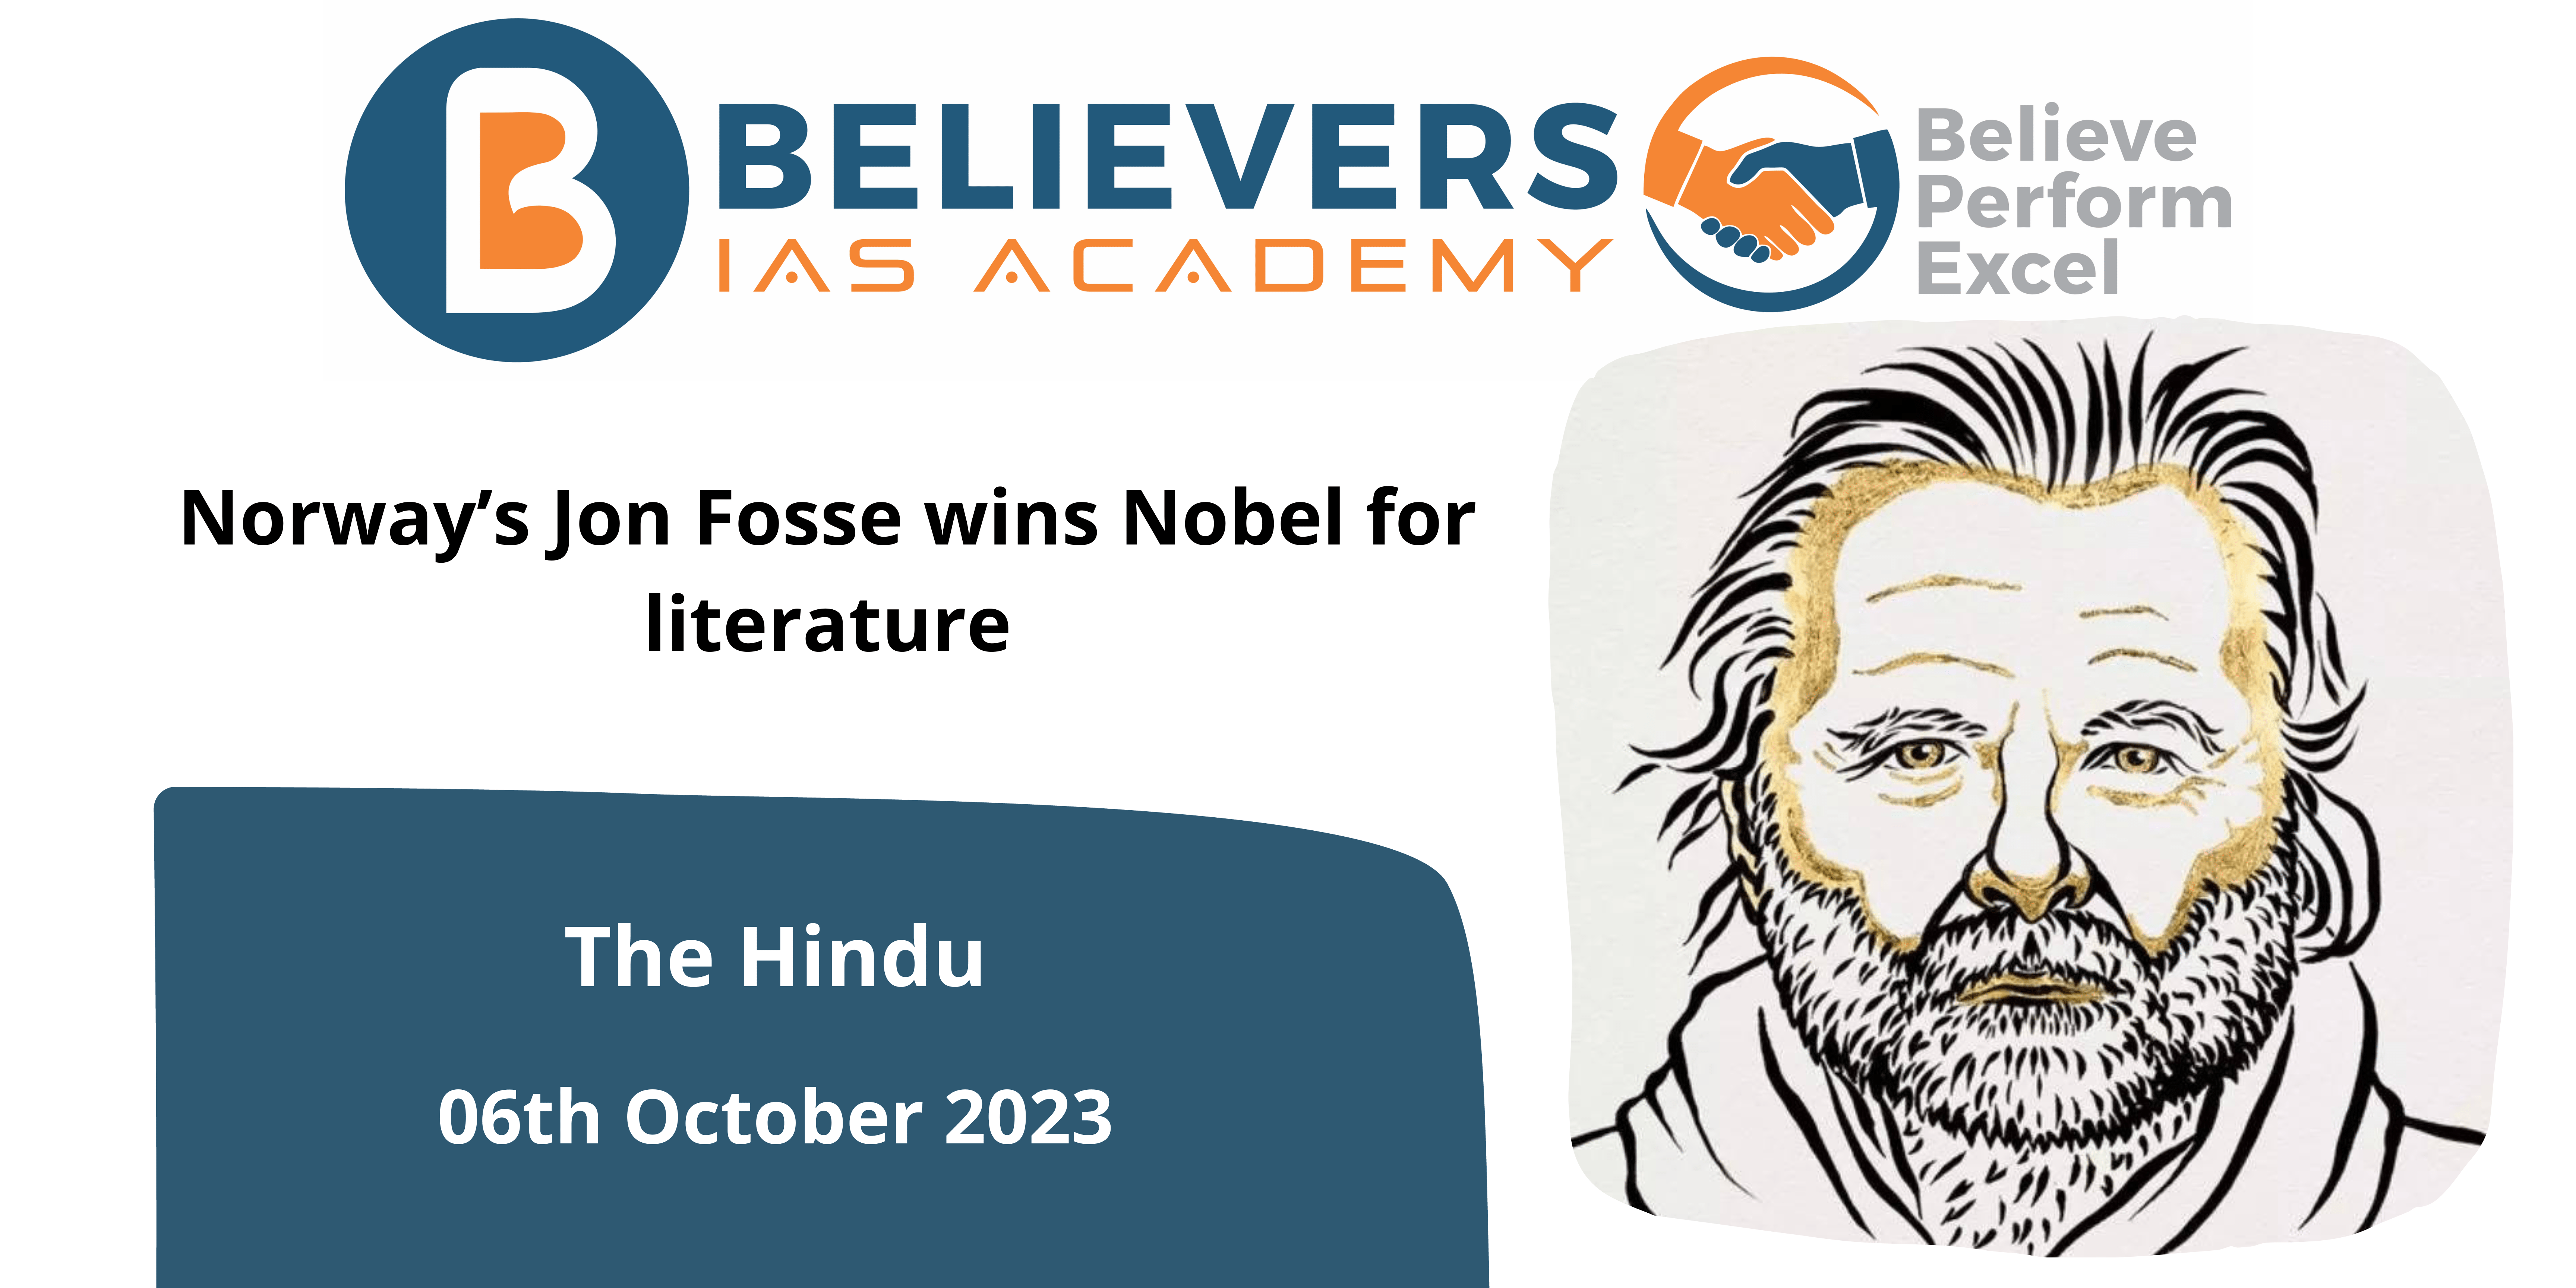 Norway’s Jon Fosse wins Nobel for literature